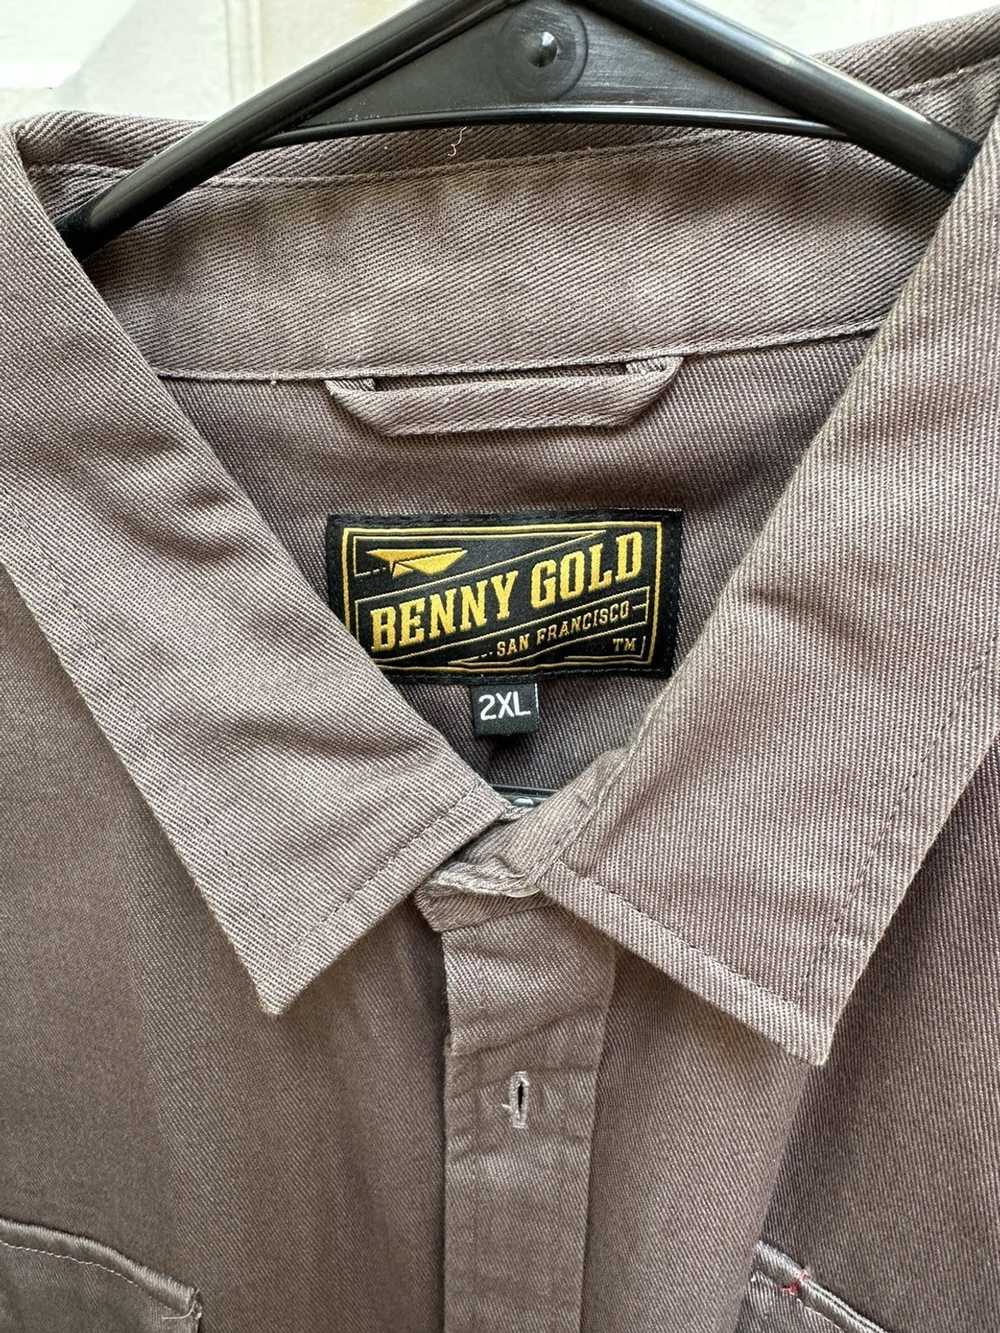 Benny Gold Benny Gold Anti Work Wear Shirt - image 2